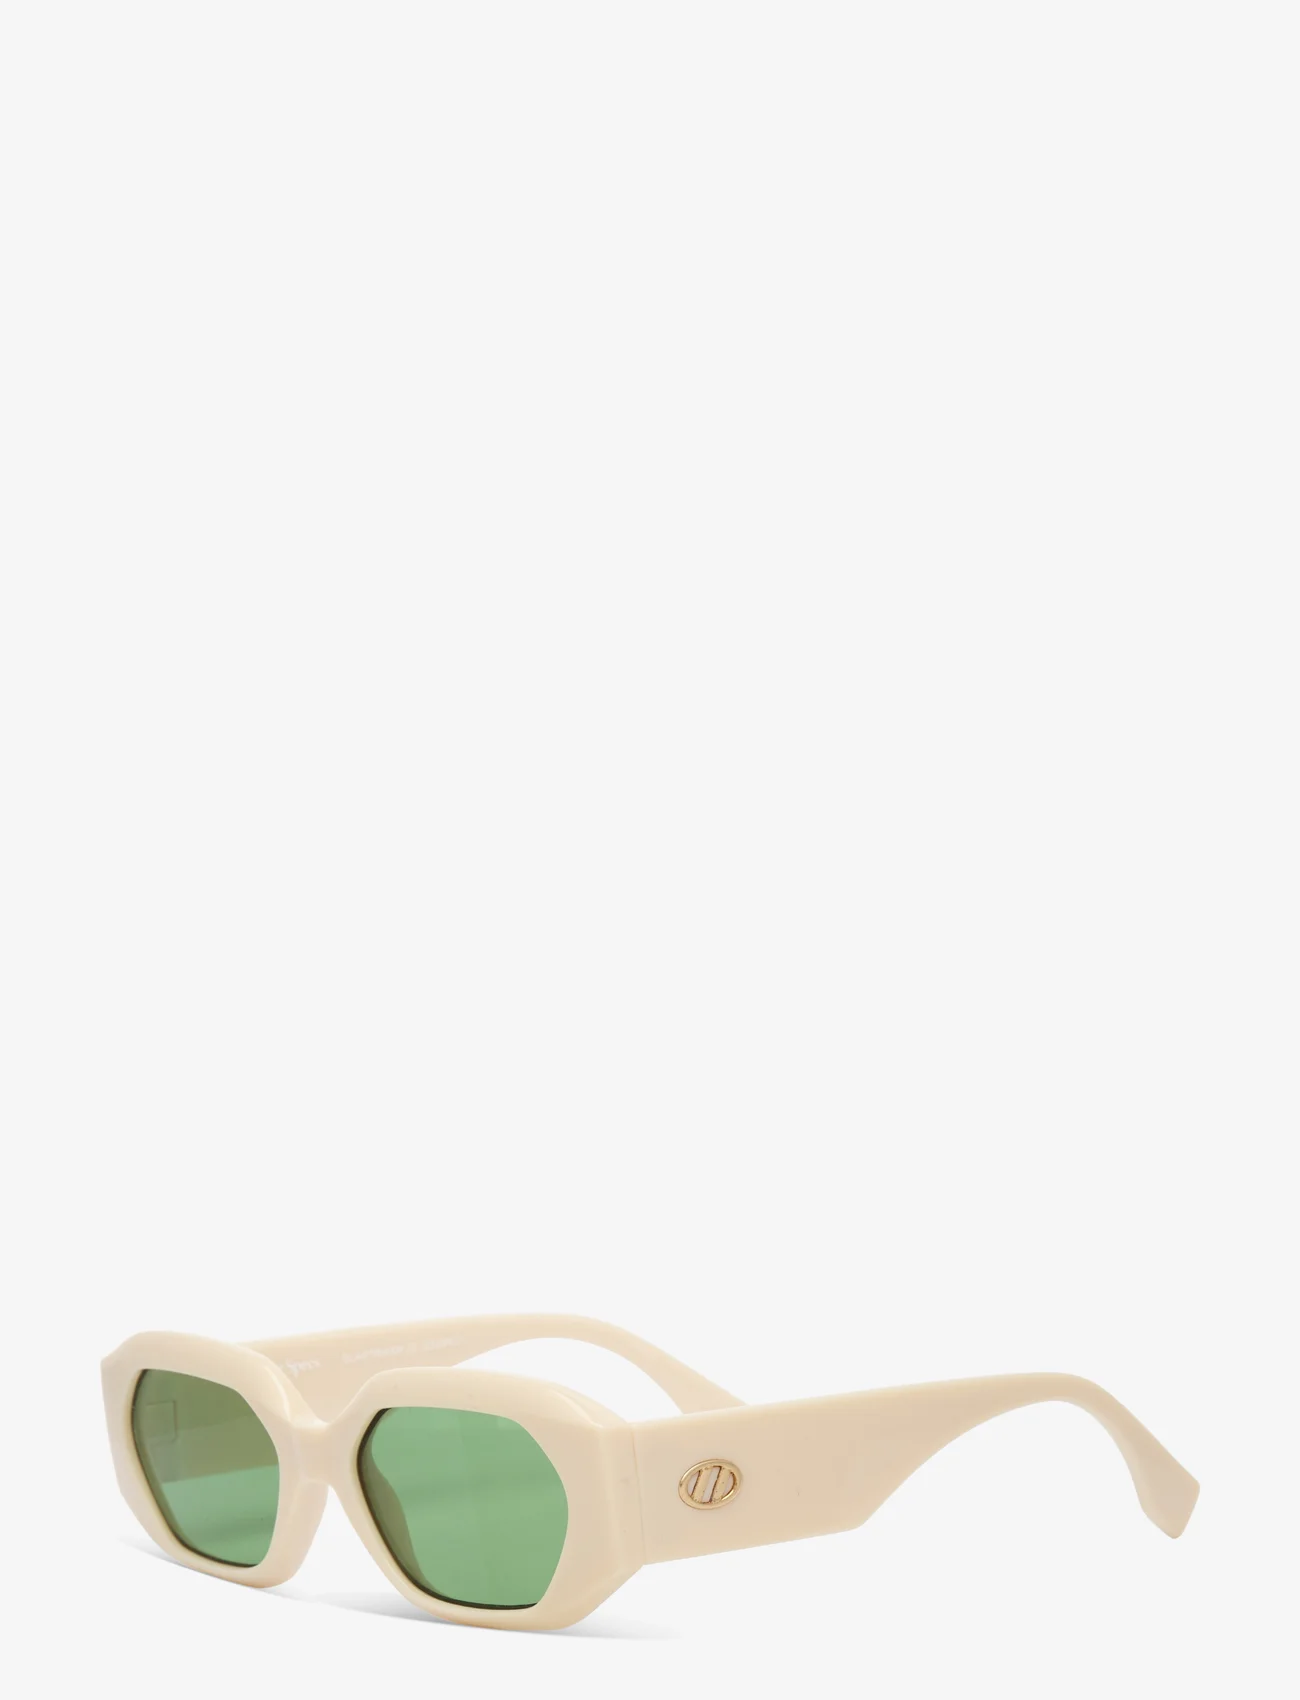 Le Specs - LE SUSTAIN - SLAPTRASH - ivory w/ emerald mono lens - 1